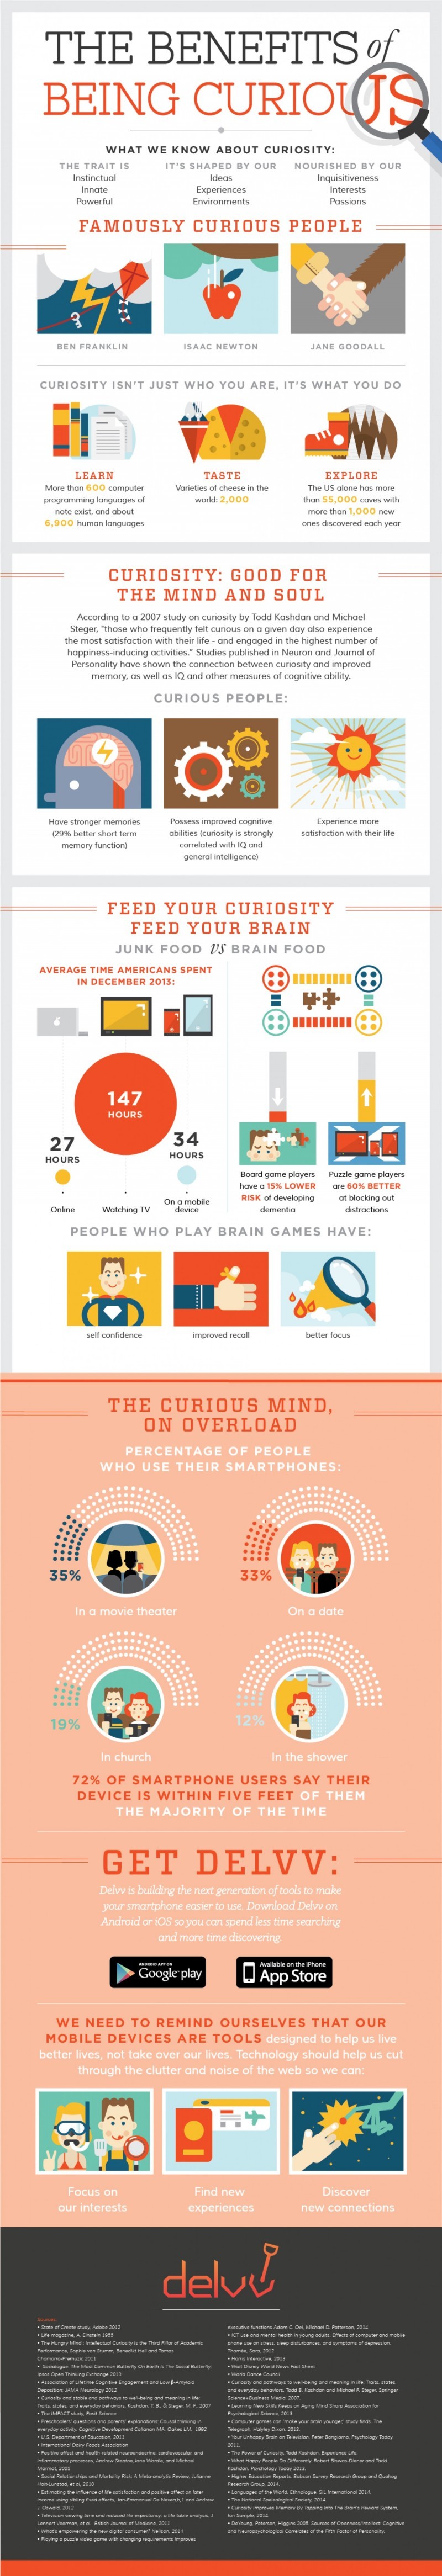 Benefits of Curiosity Infographic